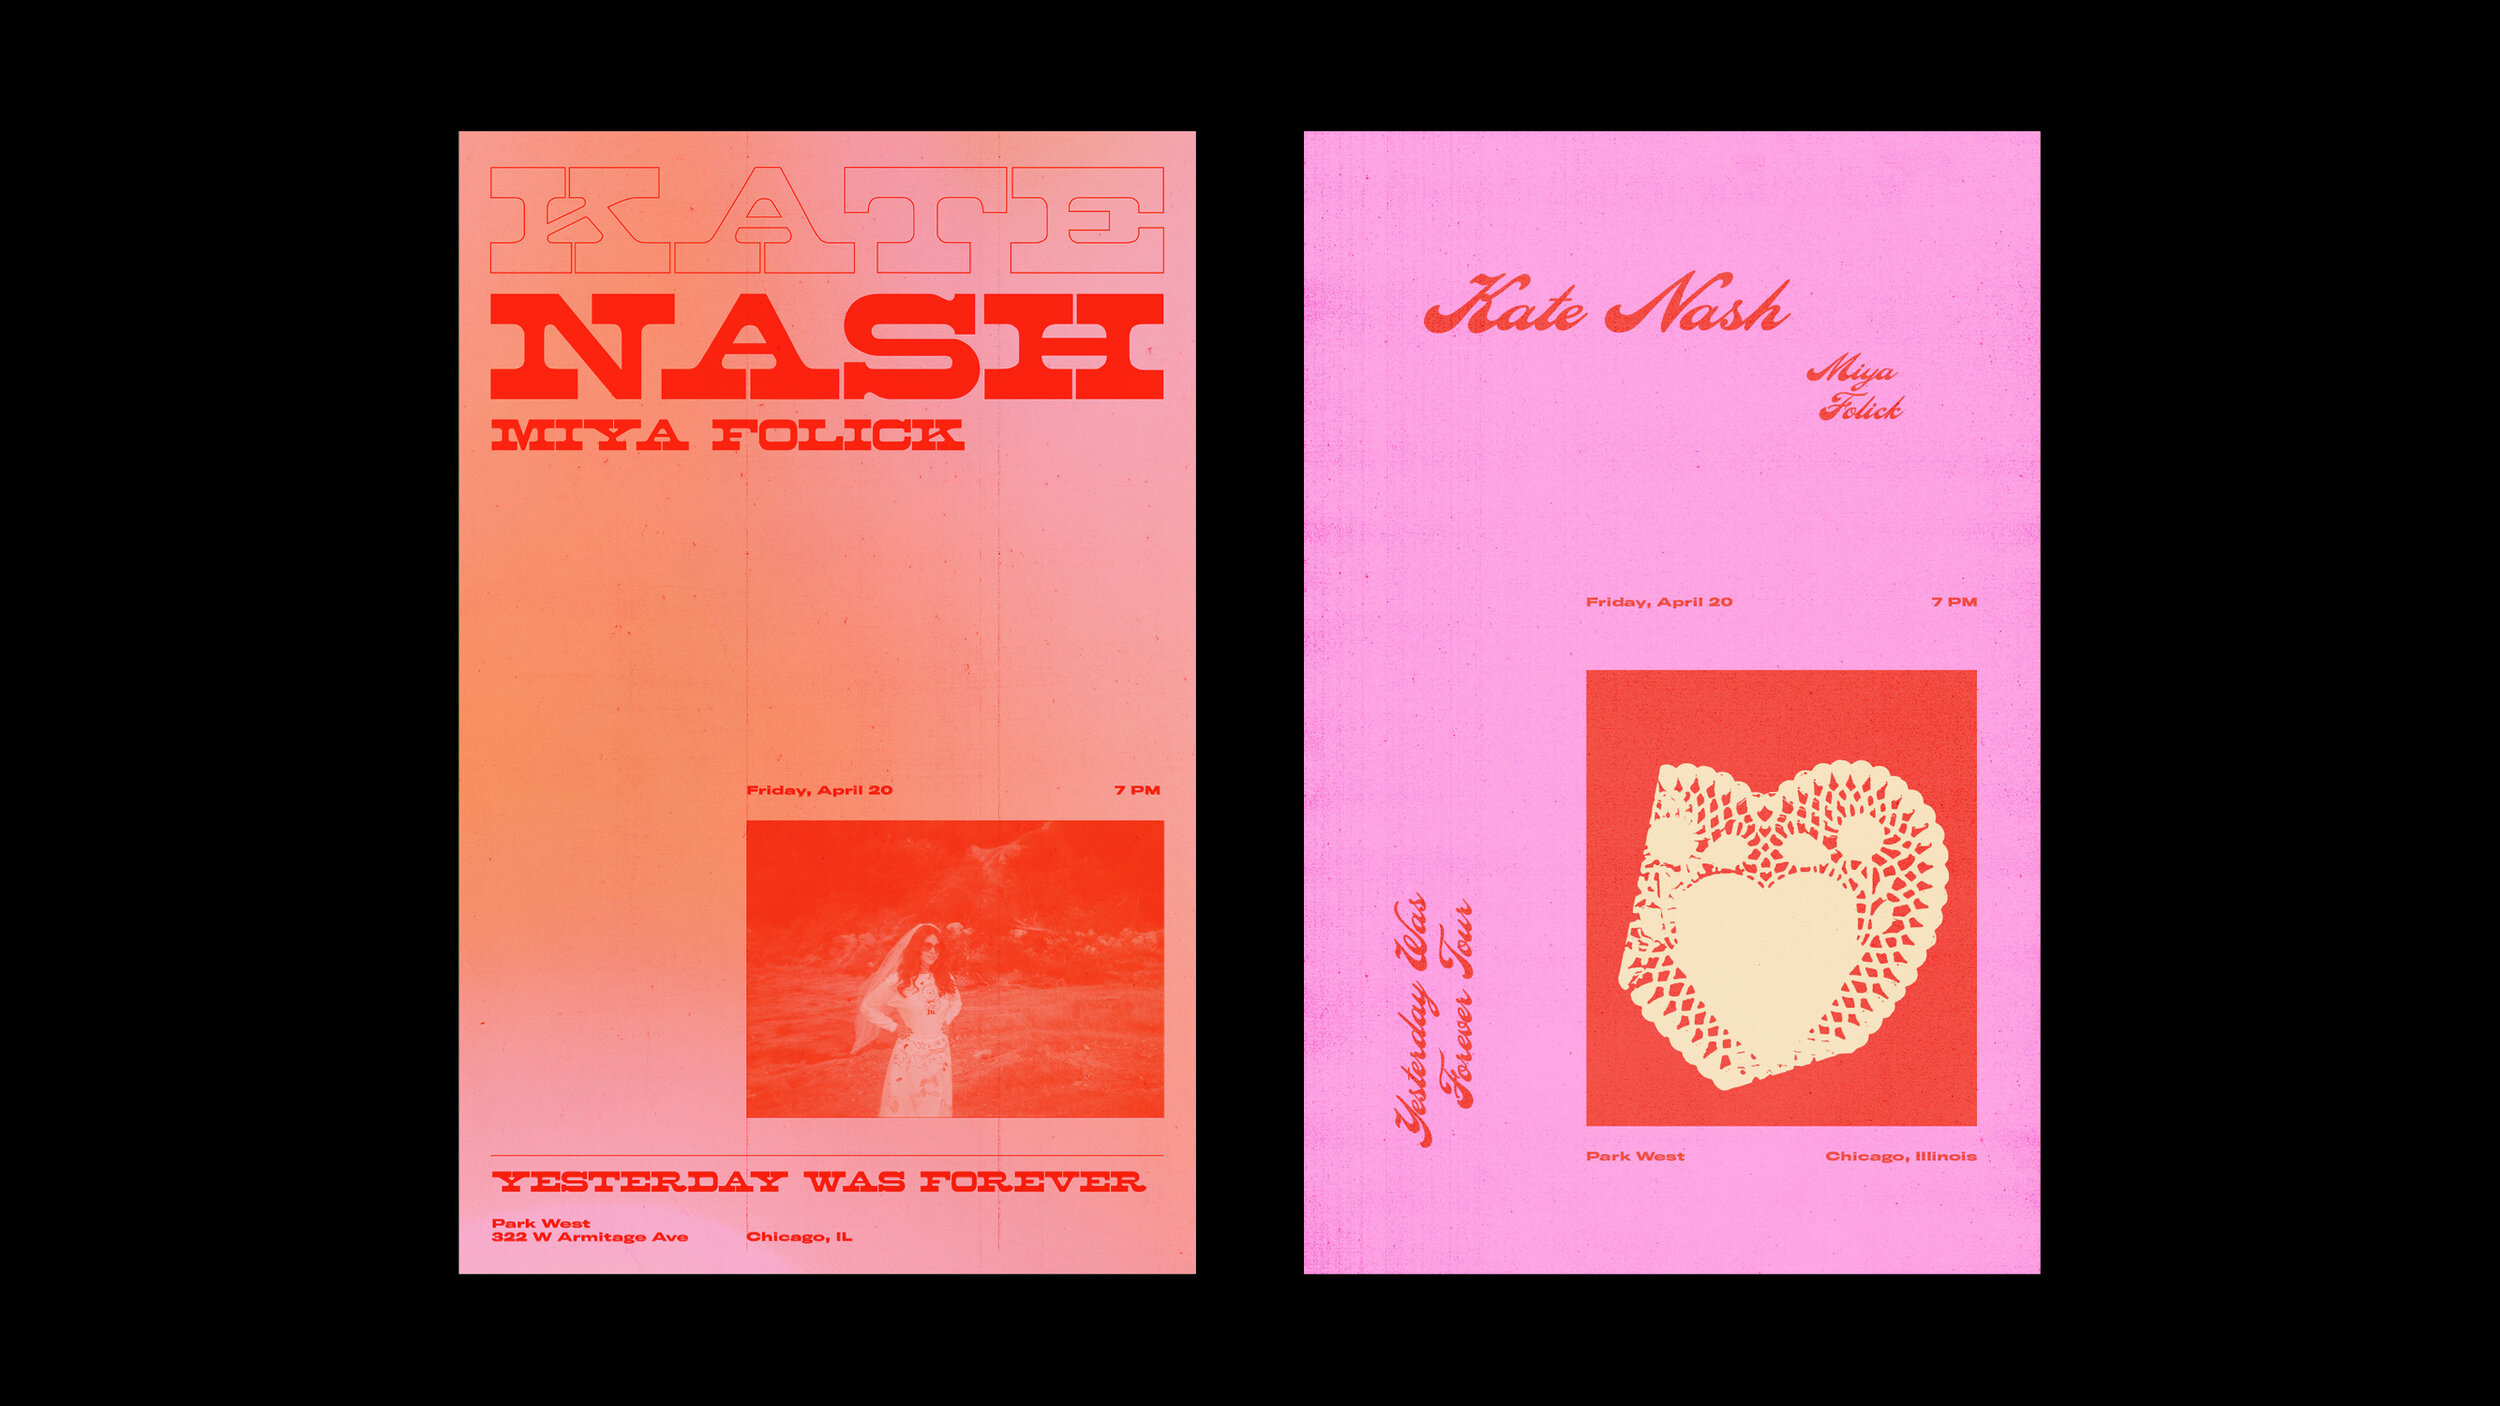  Kate Nash (Posters, Printed Materials) 